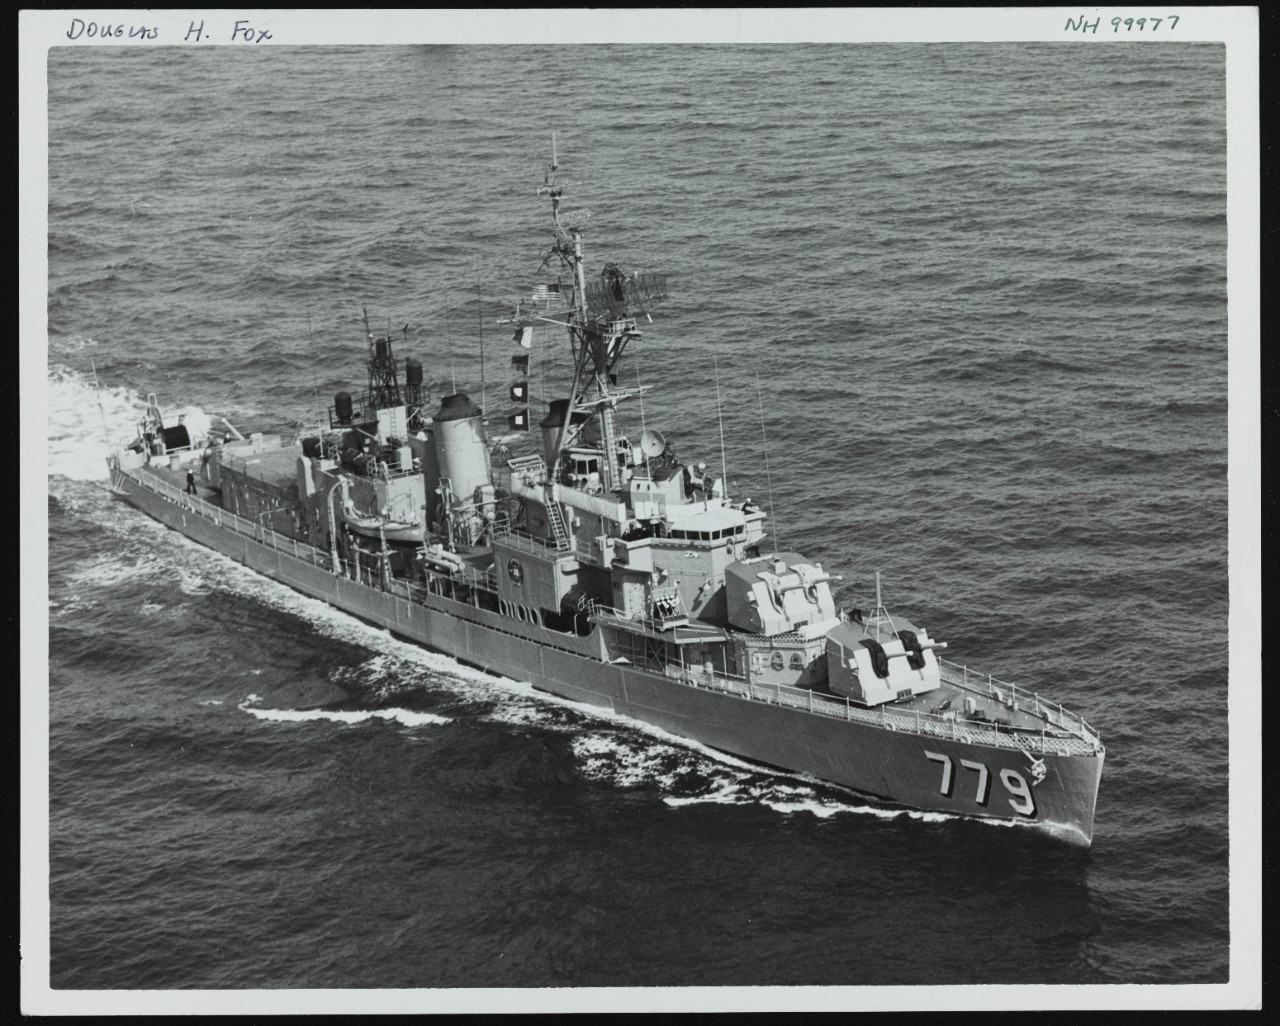 Photo #: NH 99977  USS Douglas H. Fox